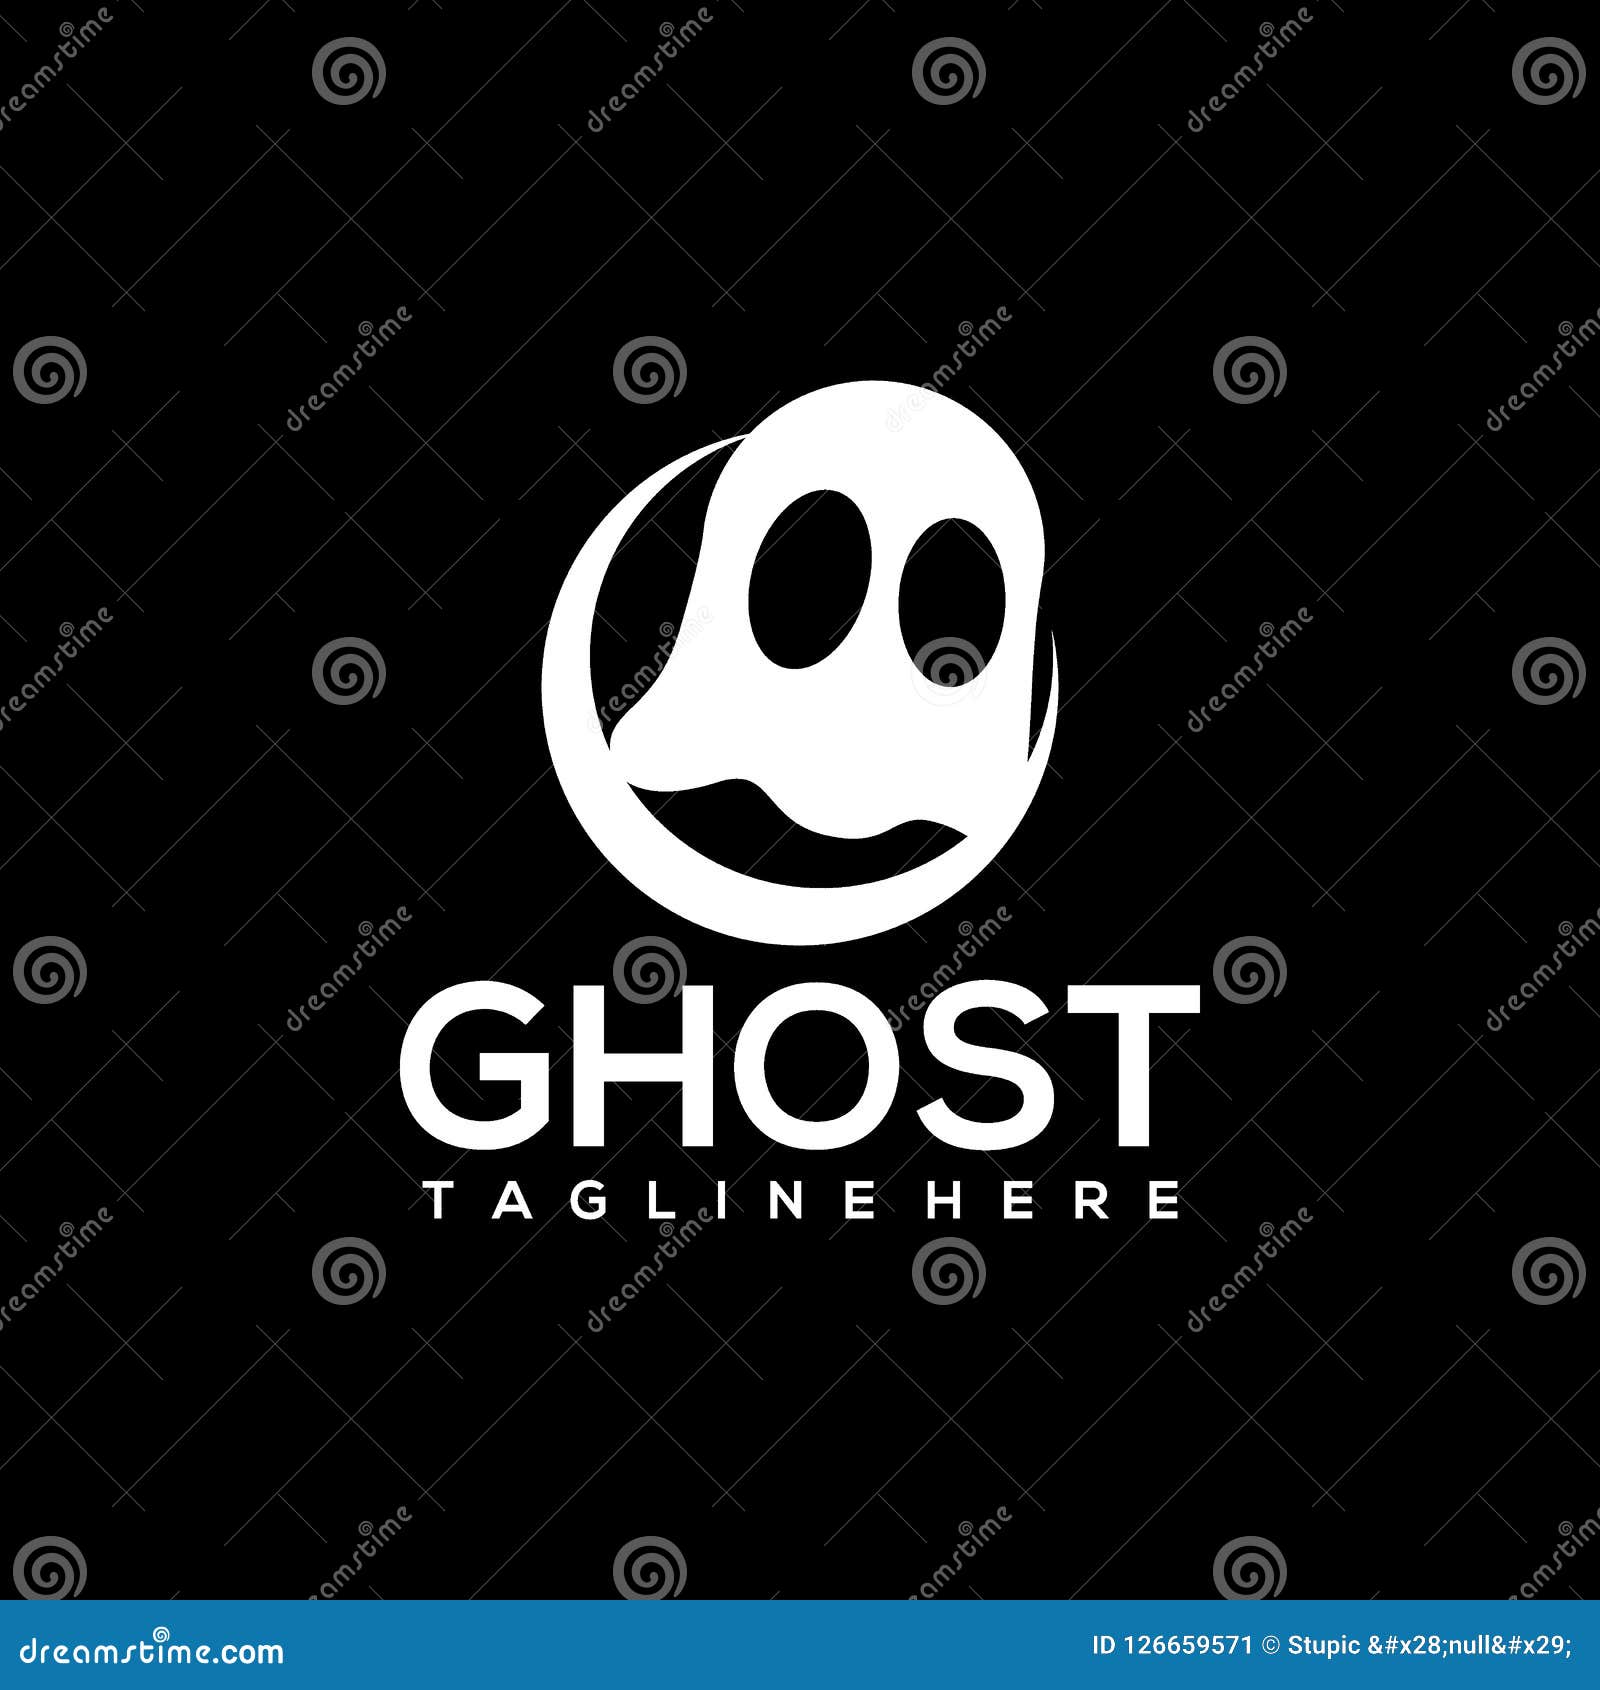 Ghost Logo Mascot Team Gaming Concept: Vector có sẵn (miễn phí bản quyền)  1535894777 | Shutterstock